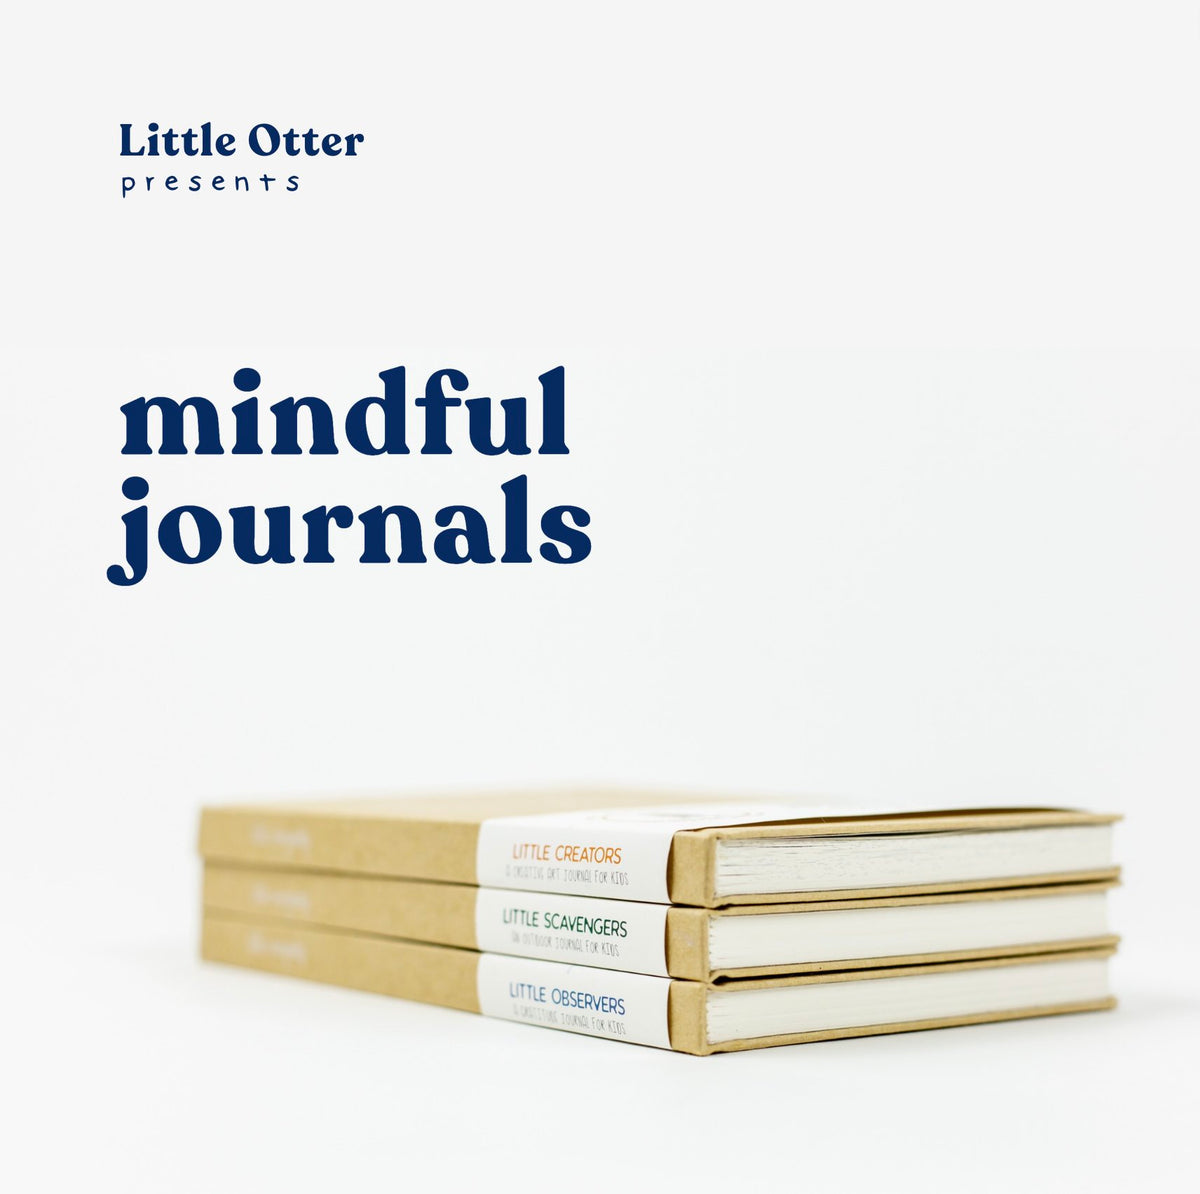 Mindful Kids Journals – Little Renegades